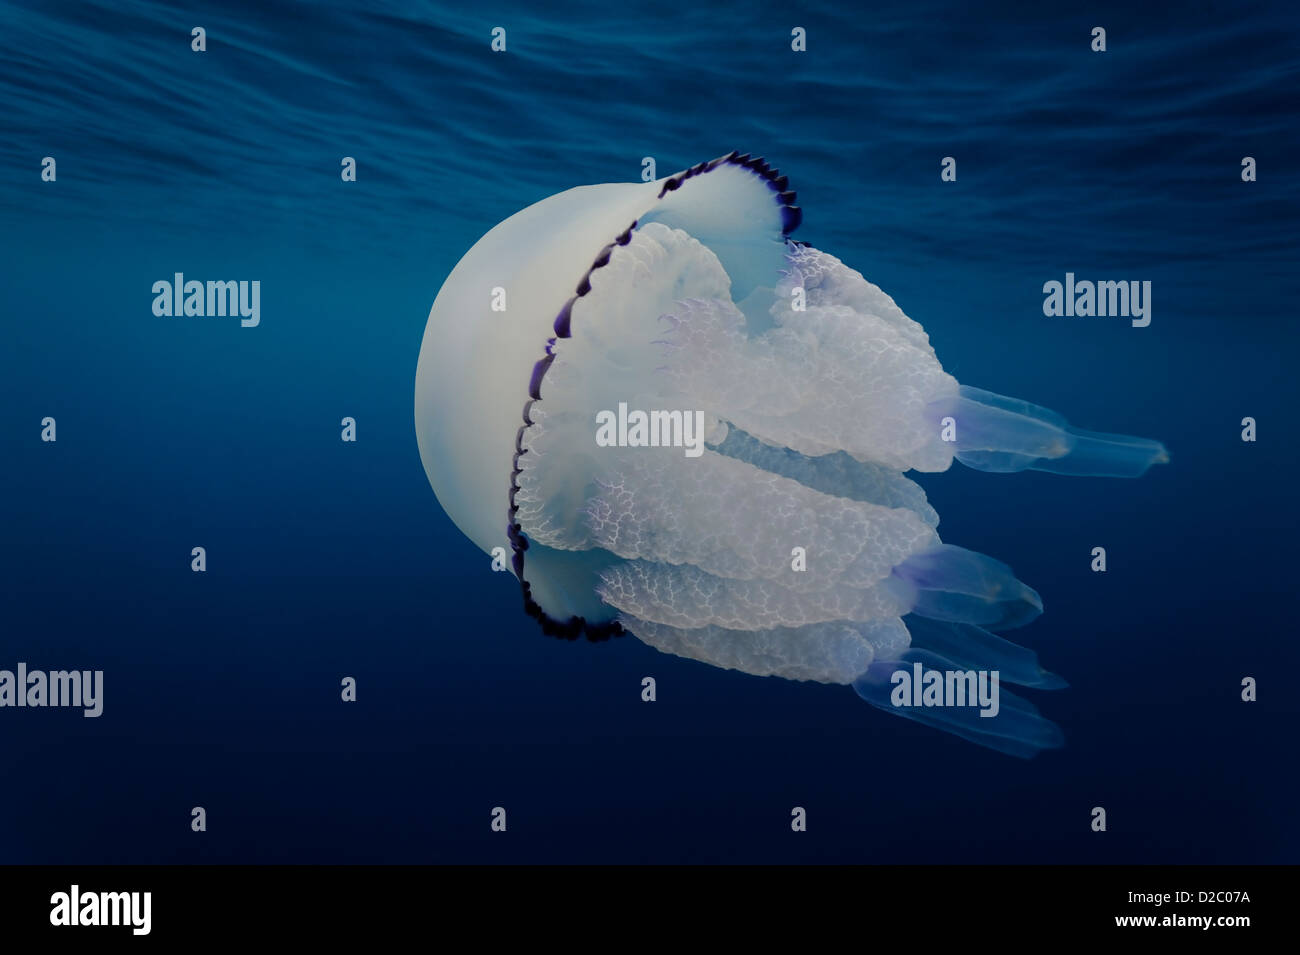 Underwater view of jellyfish swimming near the surface, Rhizostoma pulmo in Mediterranean Sea Stock Photo